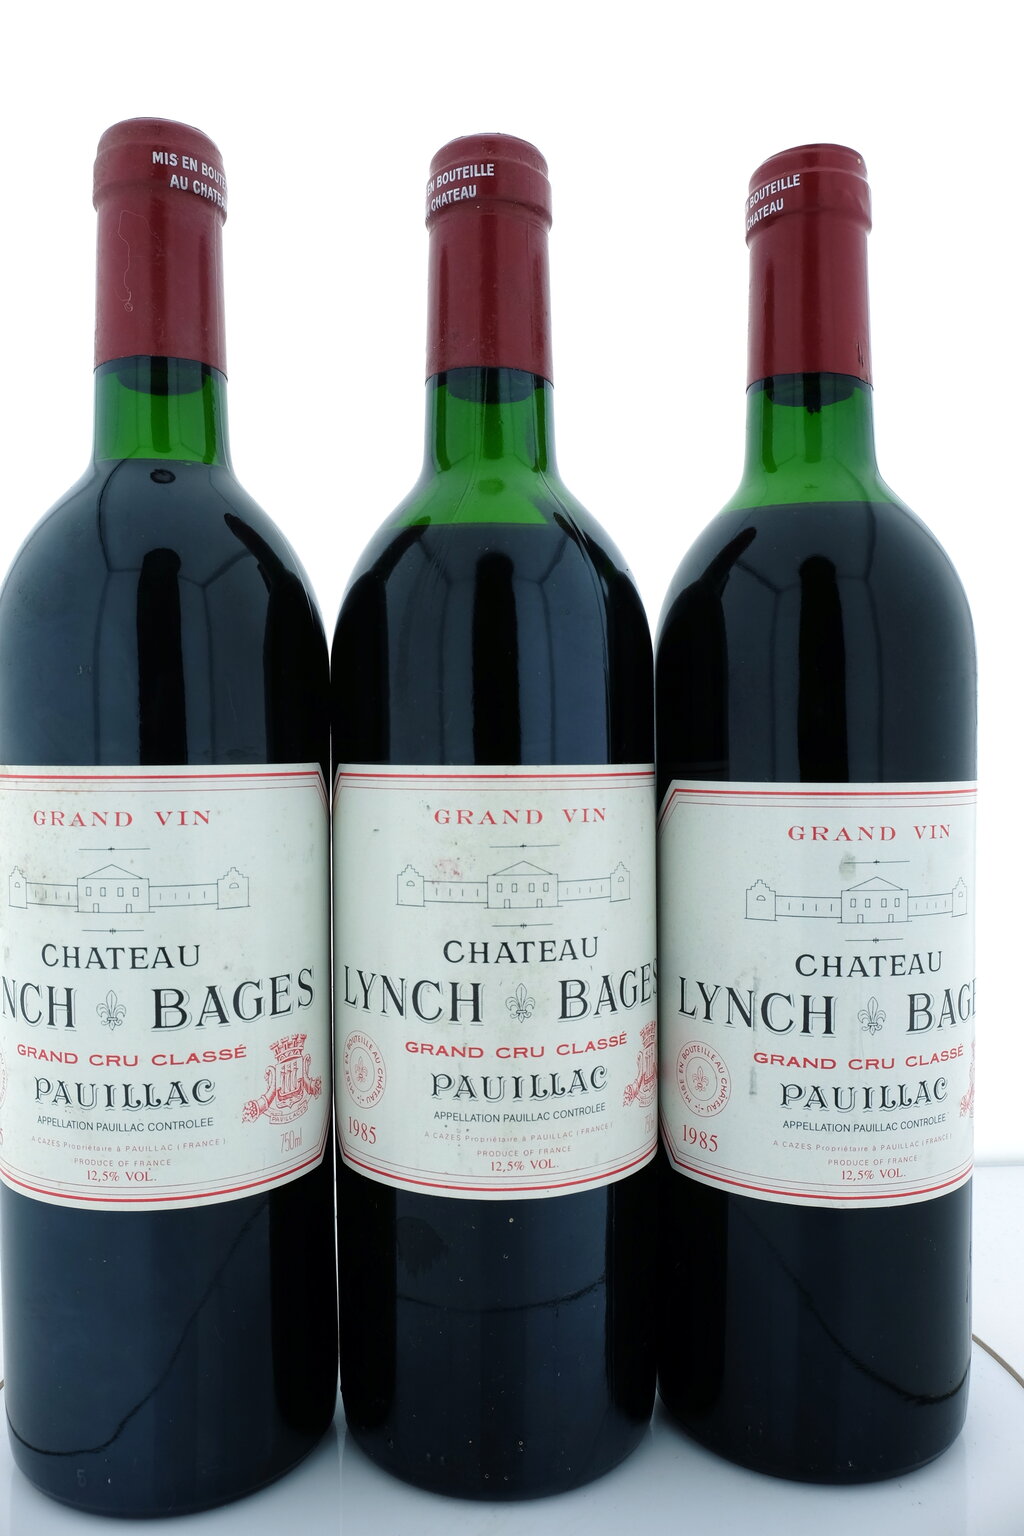 Château Lynch Bages 1985